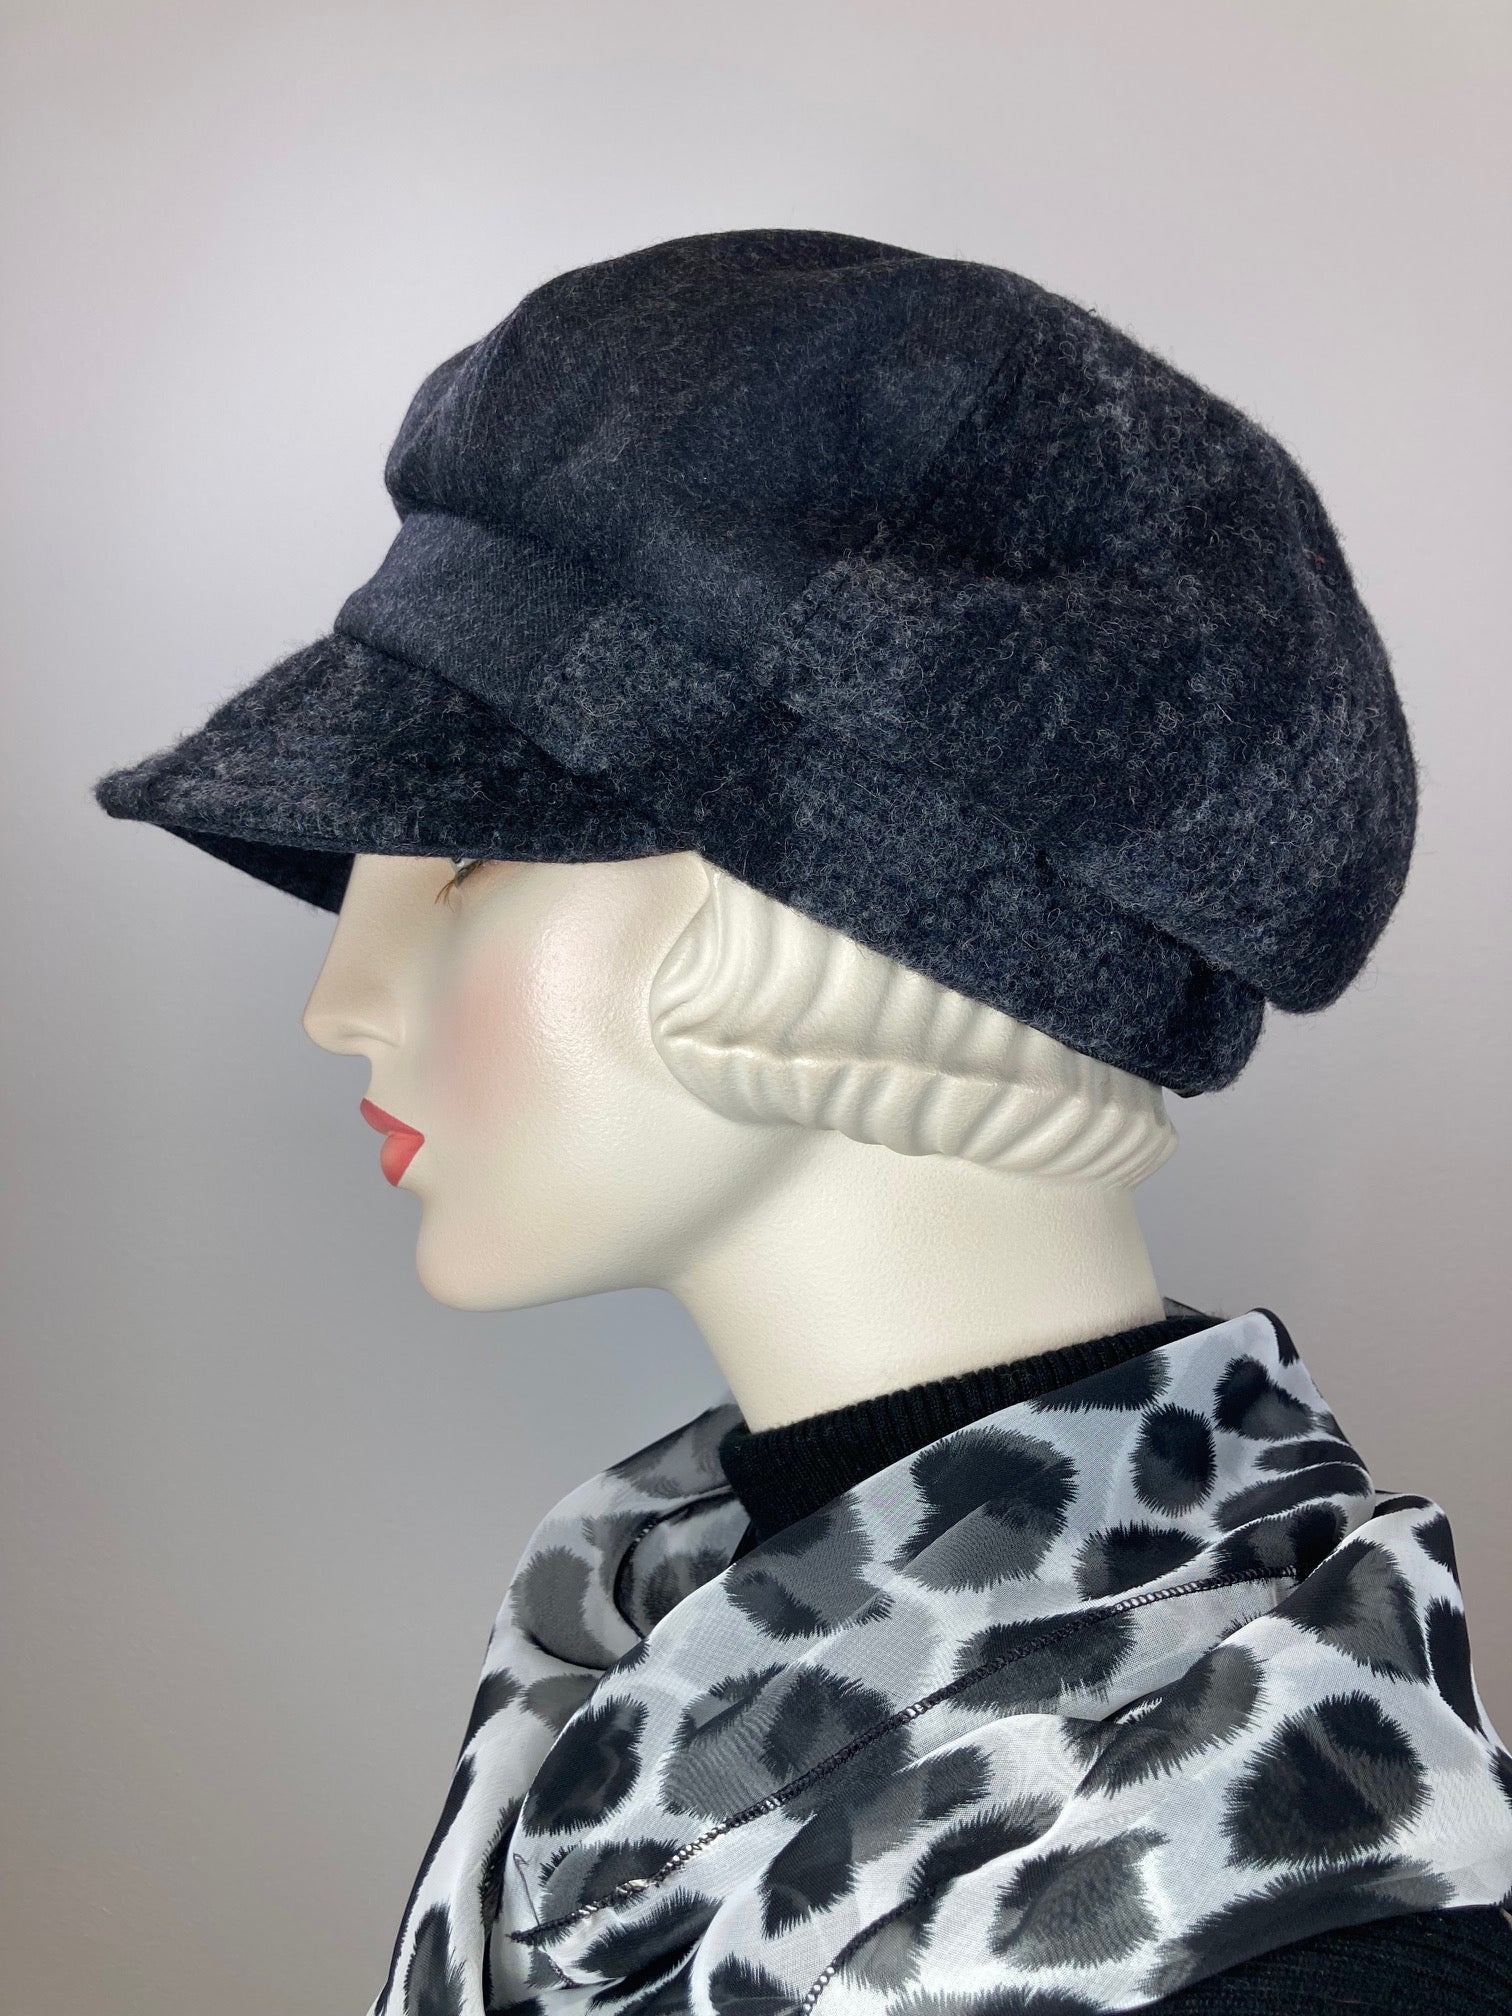 Womens black and gray Hat. Soft Newsboy Hat. Slouchy Newsboy Cap. Ladies Warm Winter Hat. Classic ladies paperboy hat. Cabbie hat women.